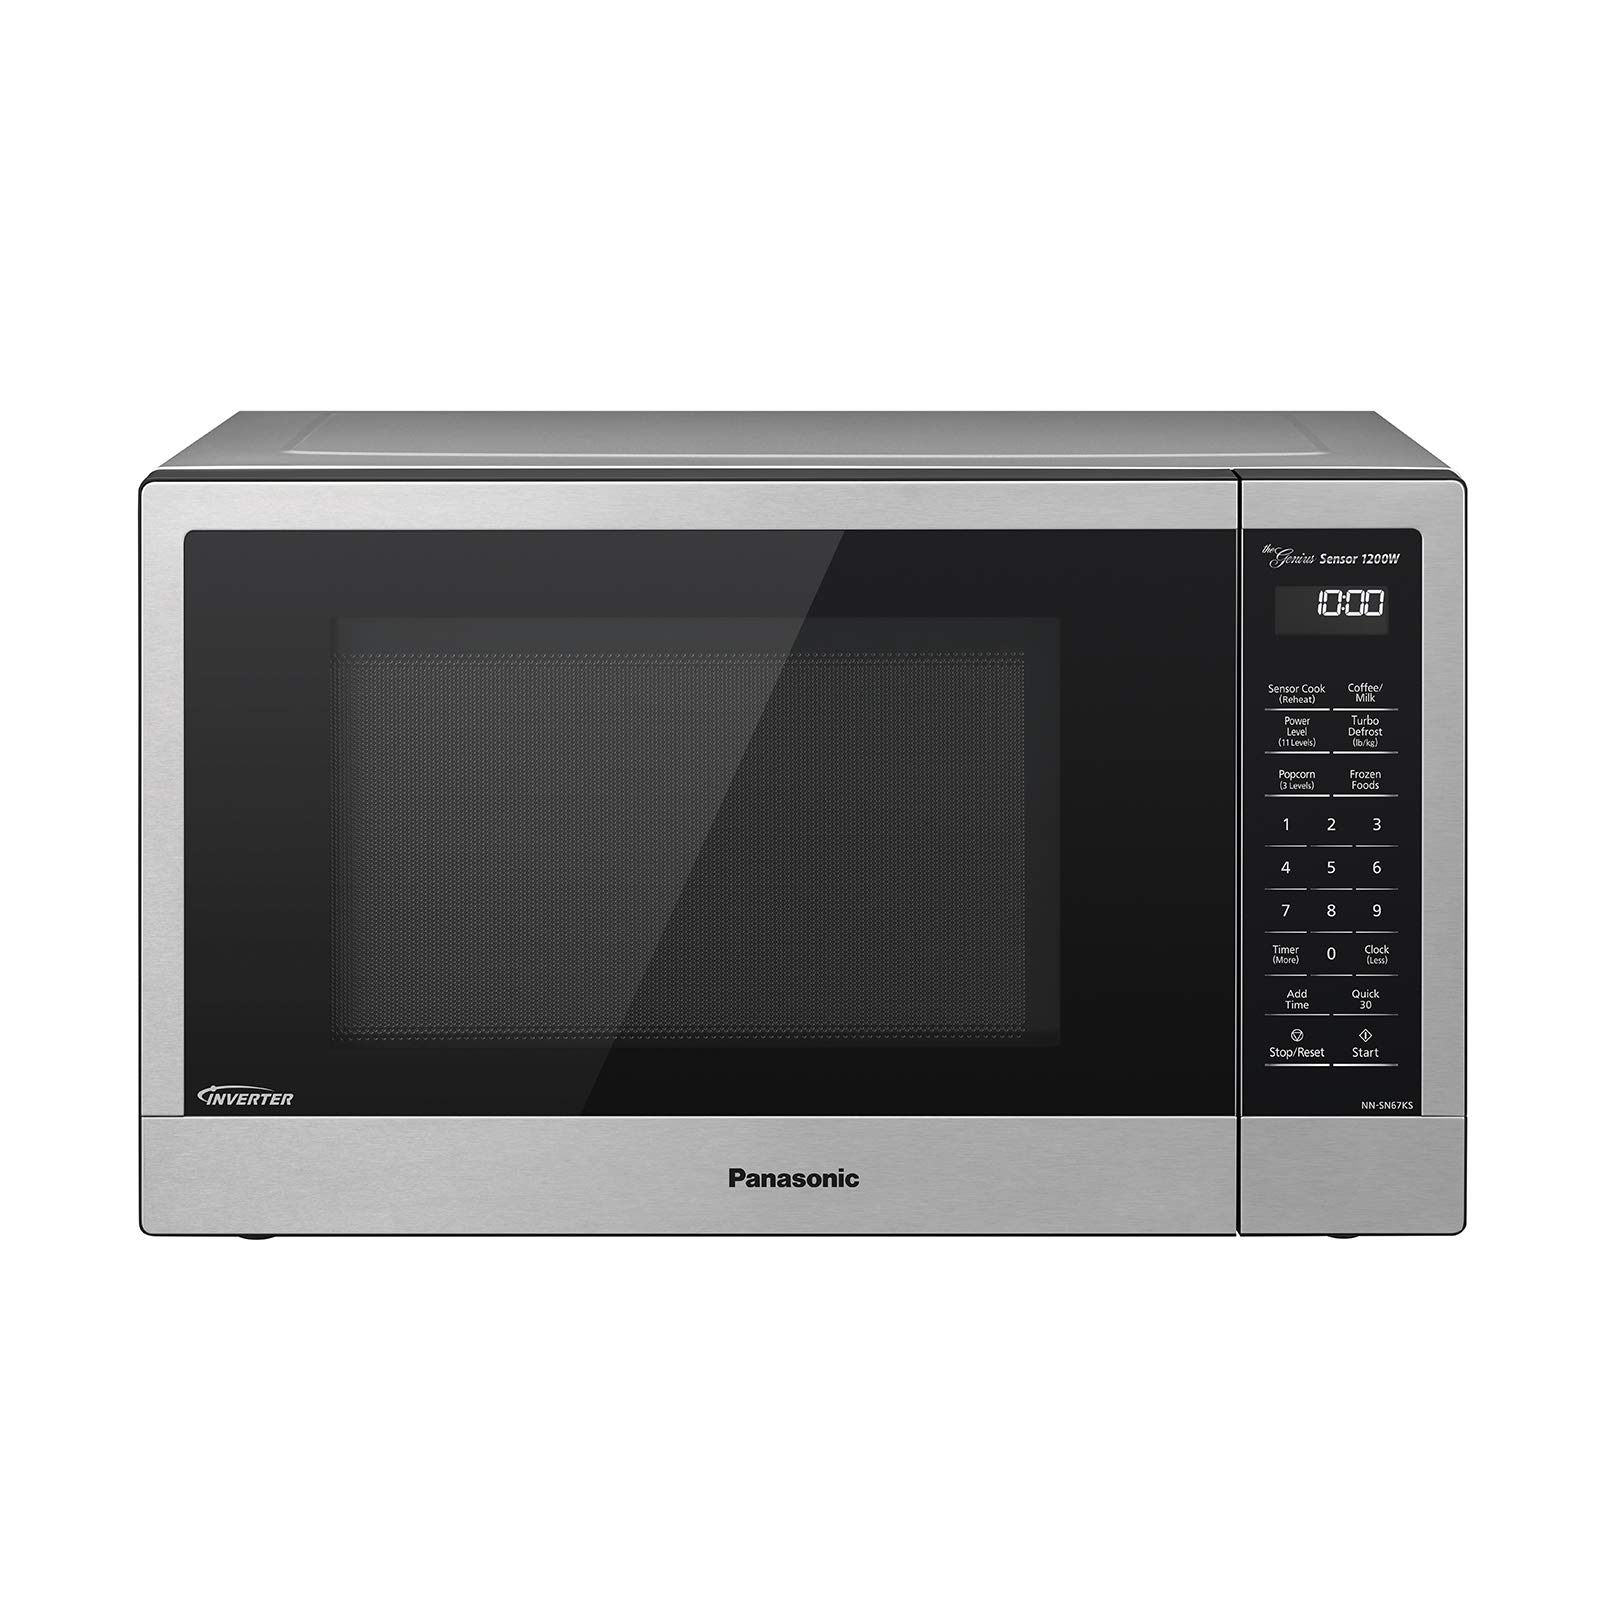 Panasonic NN-SN67K Microwave Oven, 1.2 cu.ft, Stainless Steel/Silver